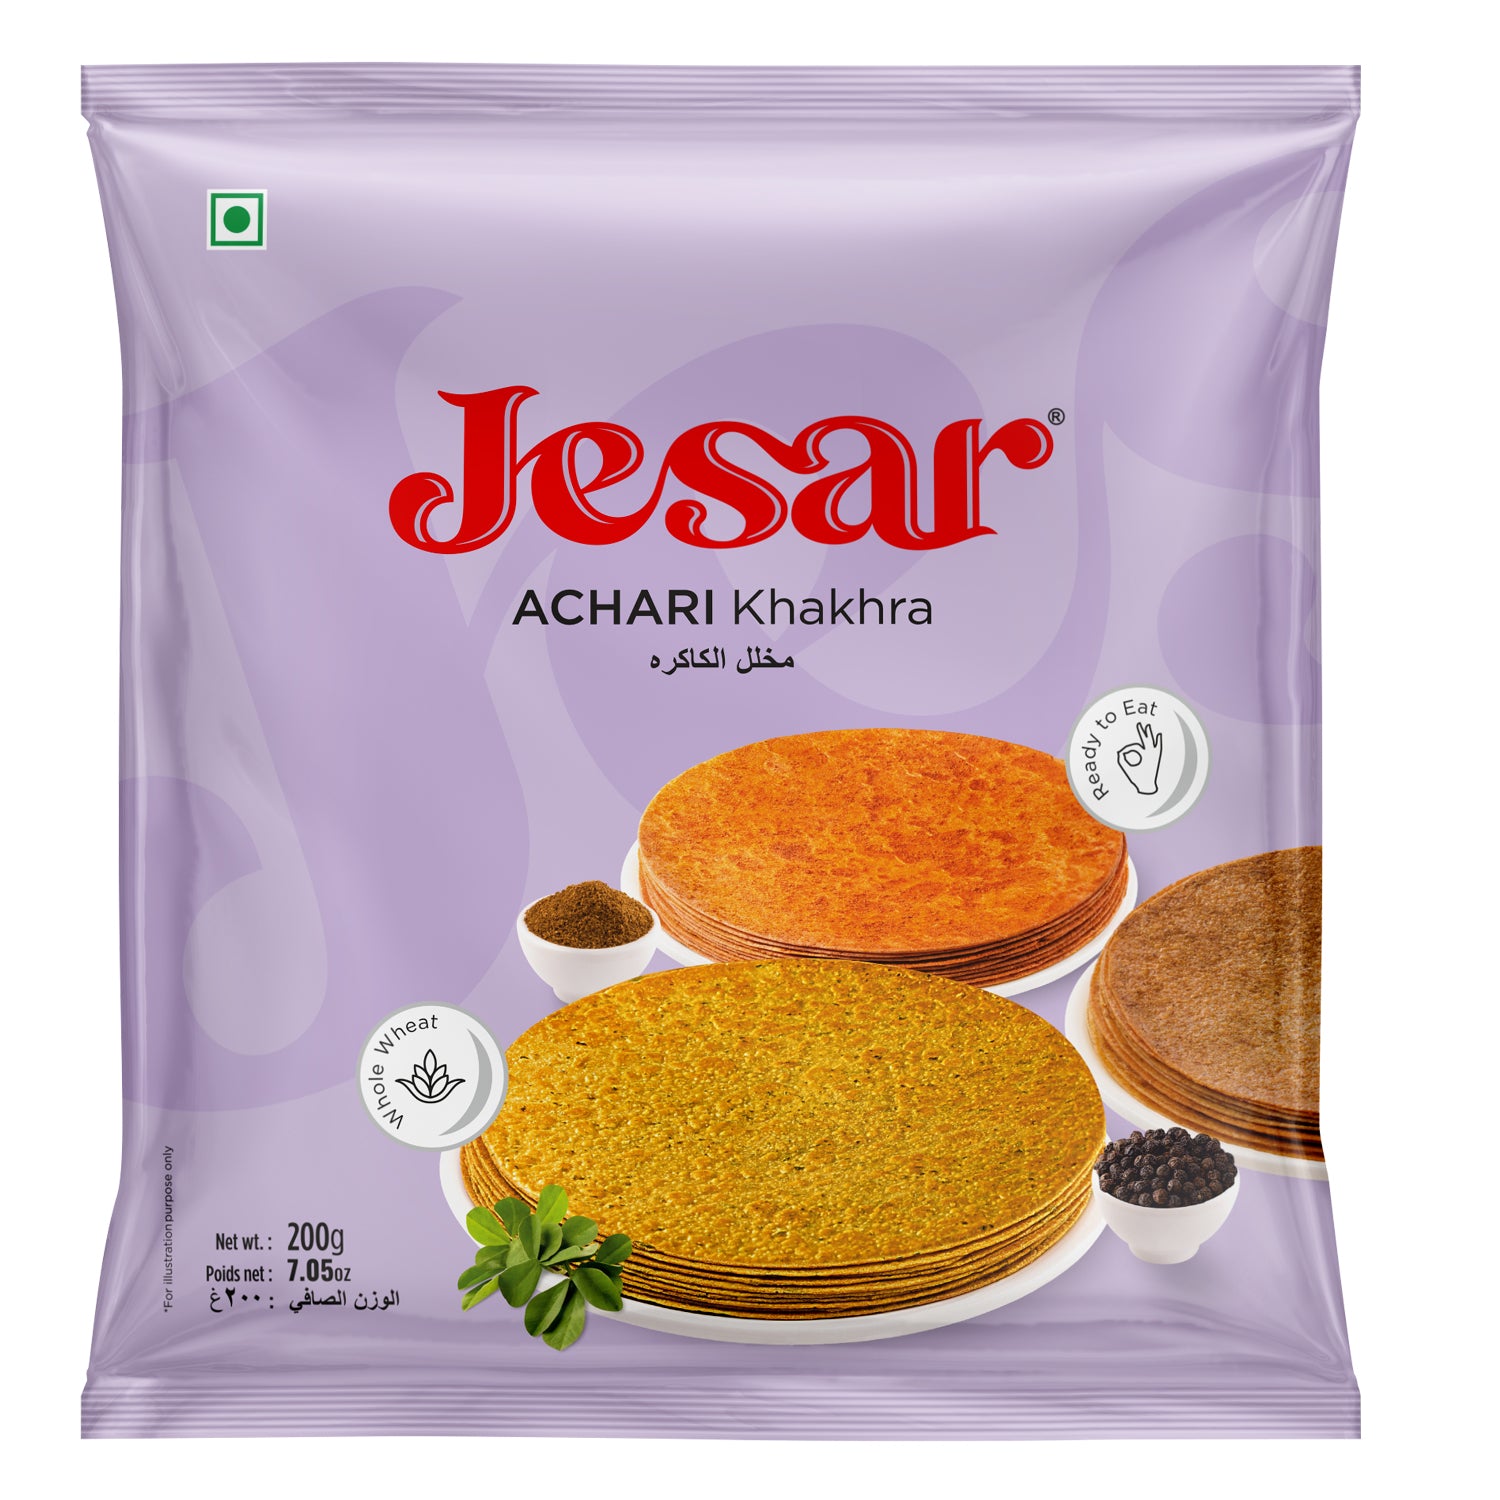 Jesar Namkeen Snacks Combo Achari Khakhra 200g -1 Pkt And BhakhriToz With Mix Pickle and Gorkeri chutney 55g - 5 Pkt